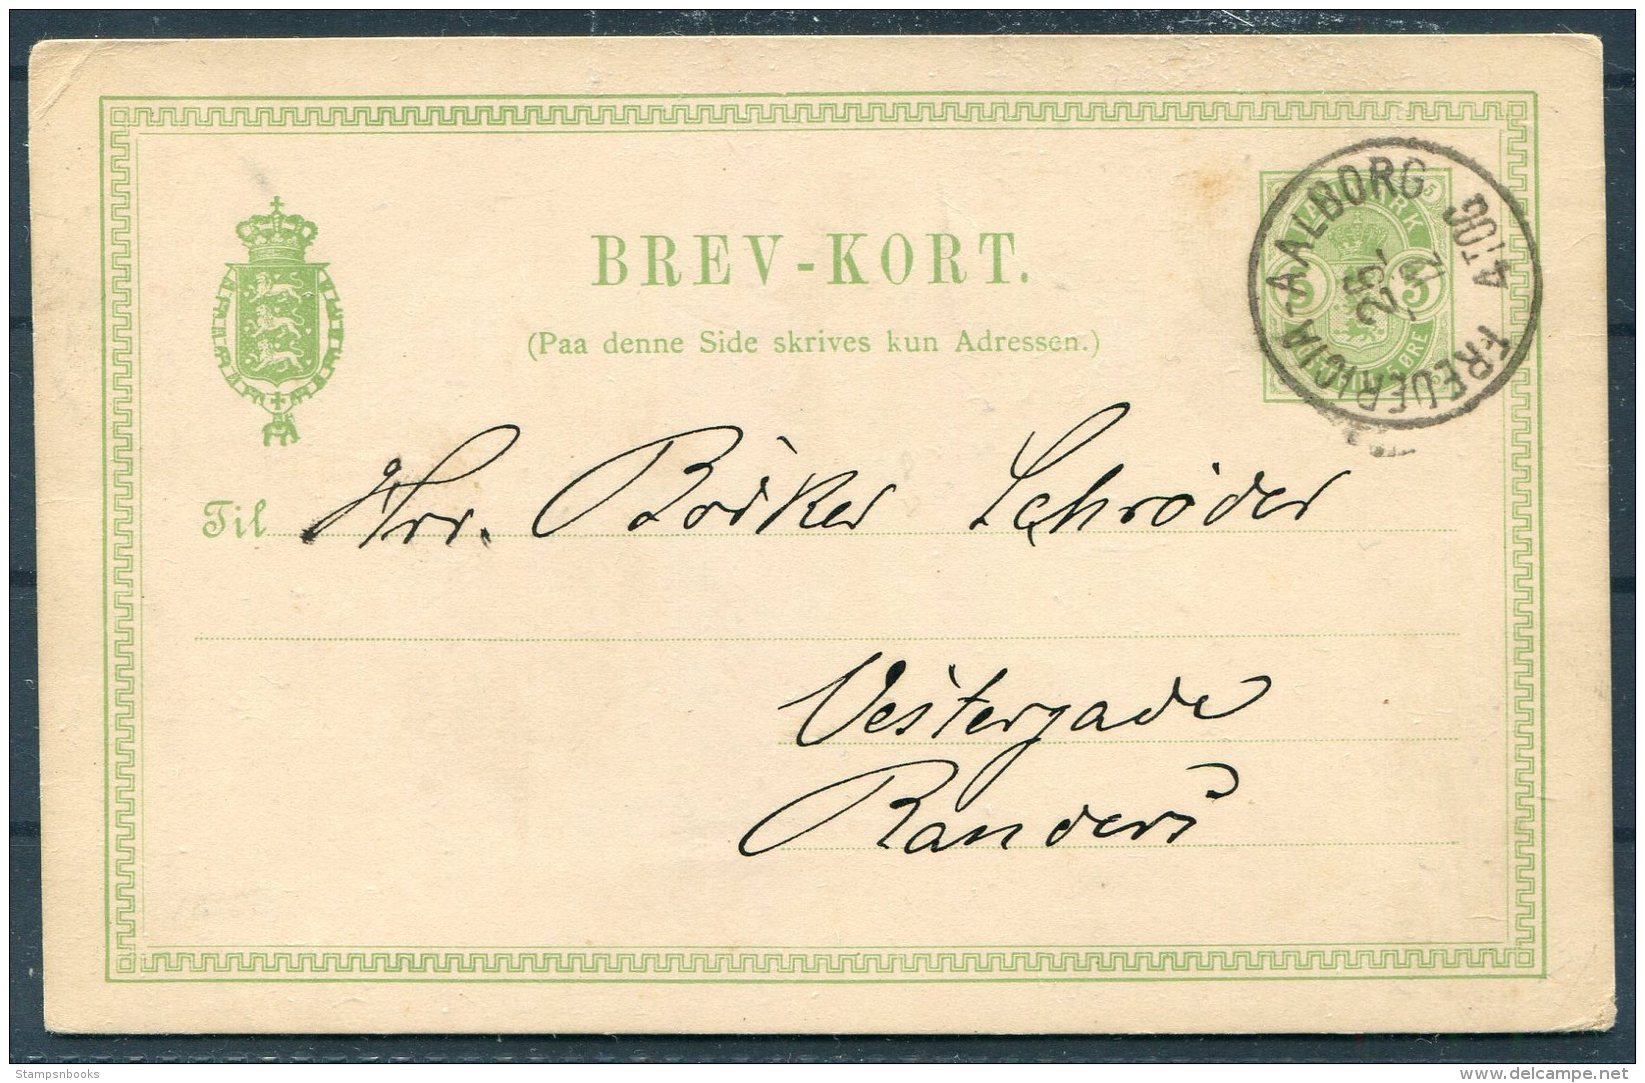 1889 Denmark Stationey Postcard. Vingegaard Pr Onaild Station. Fredericia - Aalborg TPO Railway - Randers - Covers & Documents